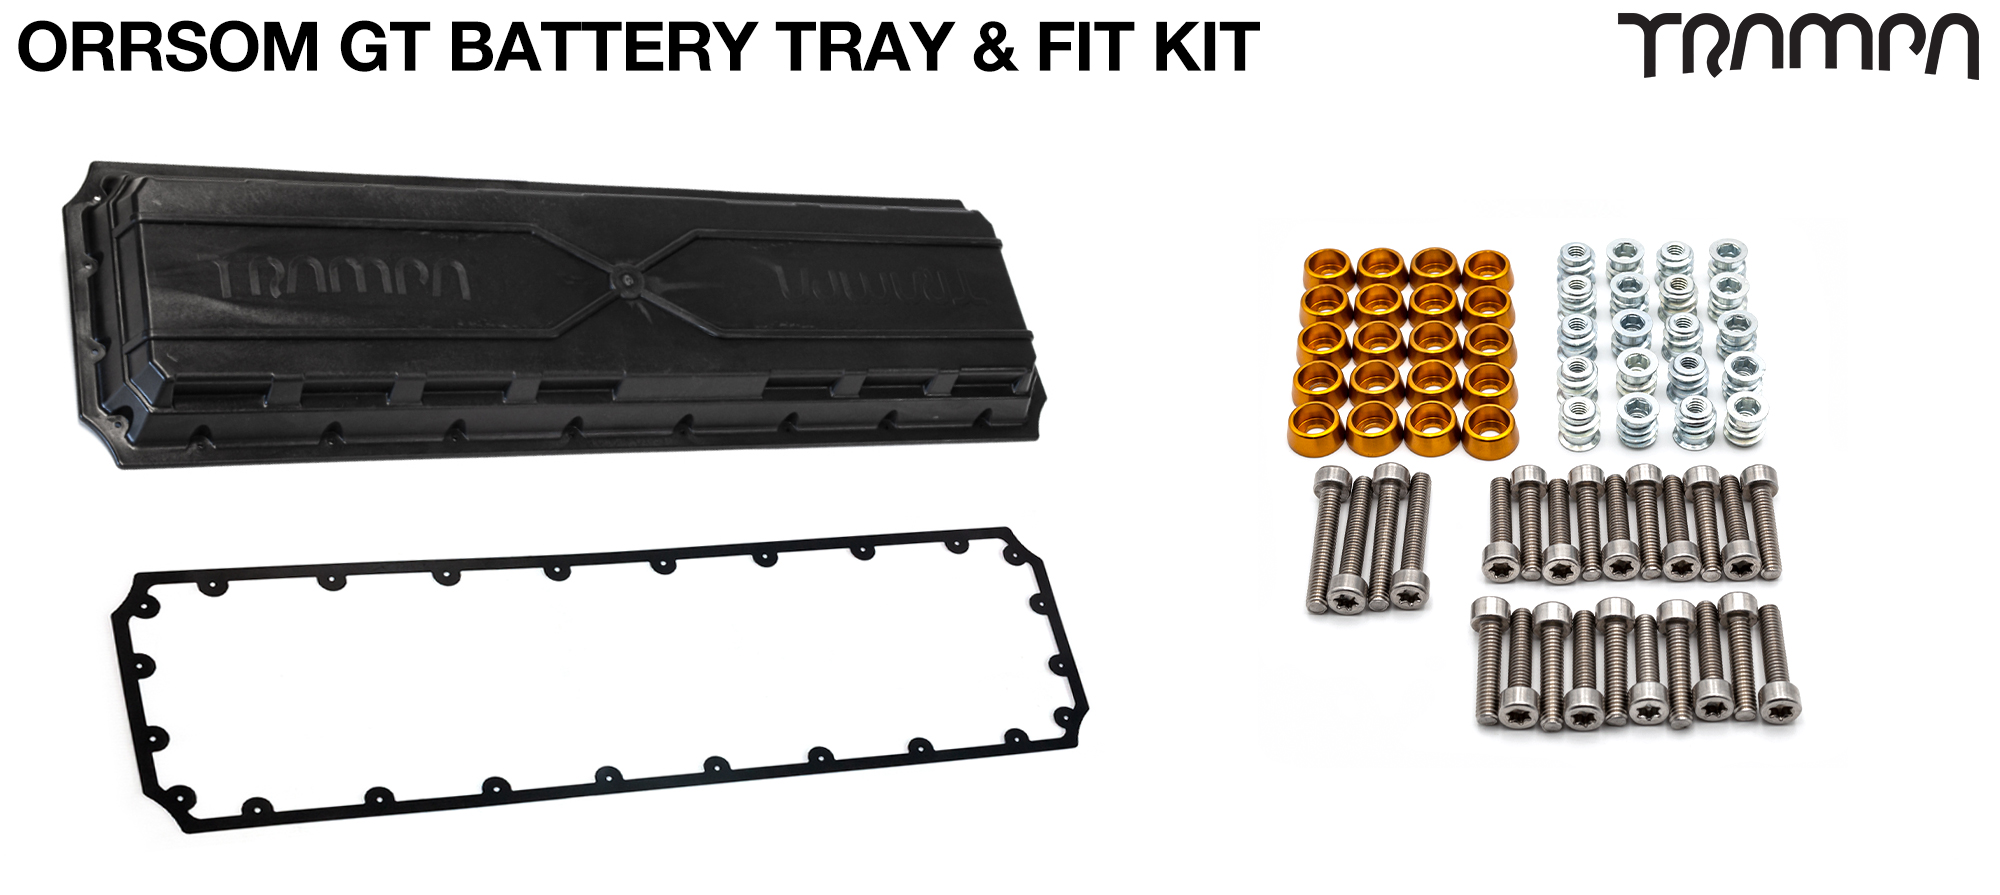 ORRSOM GT BATTERY Tray & fix kit